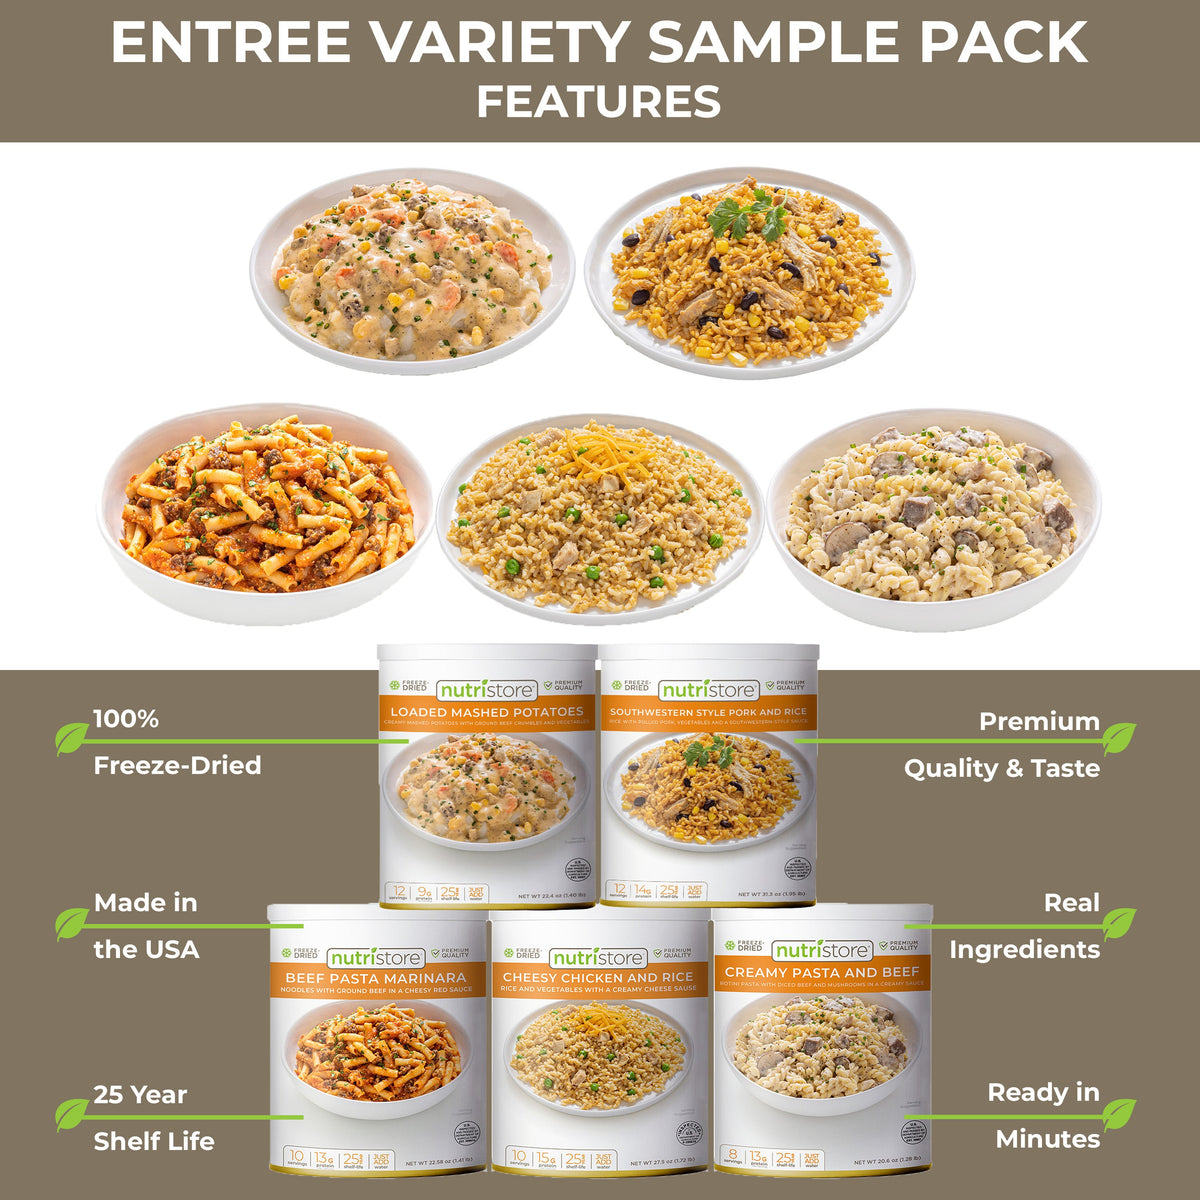 Entrée Variety Sample Pack by Nutristore